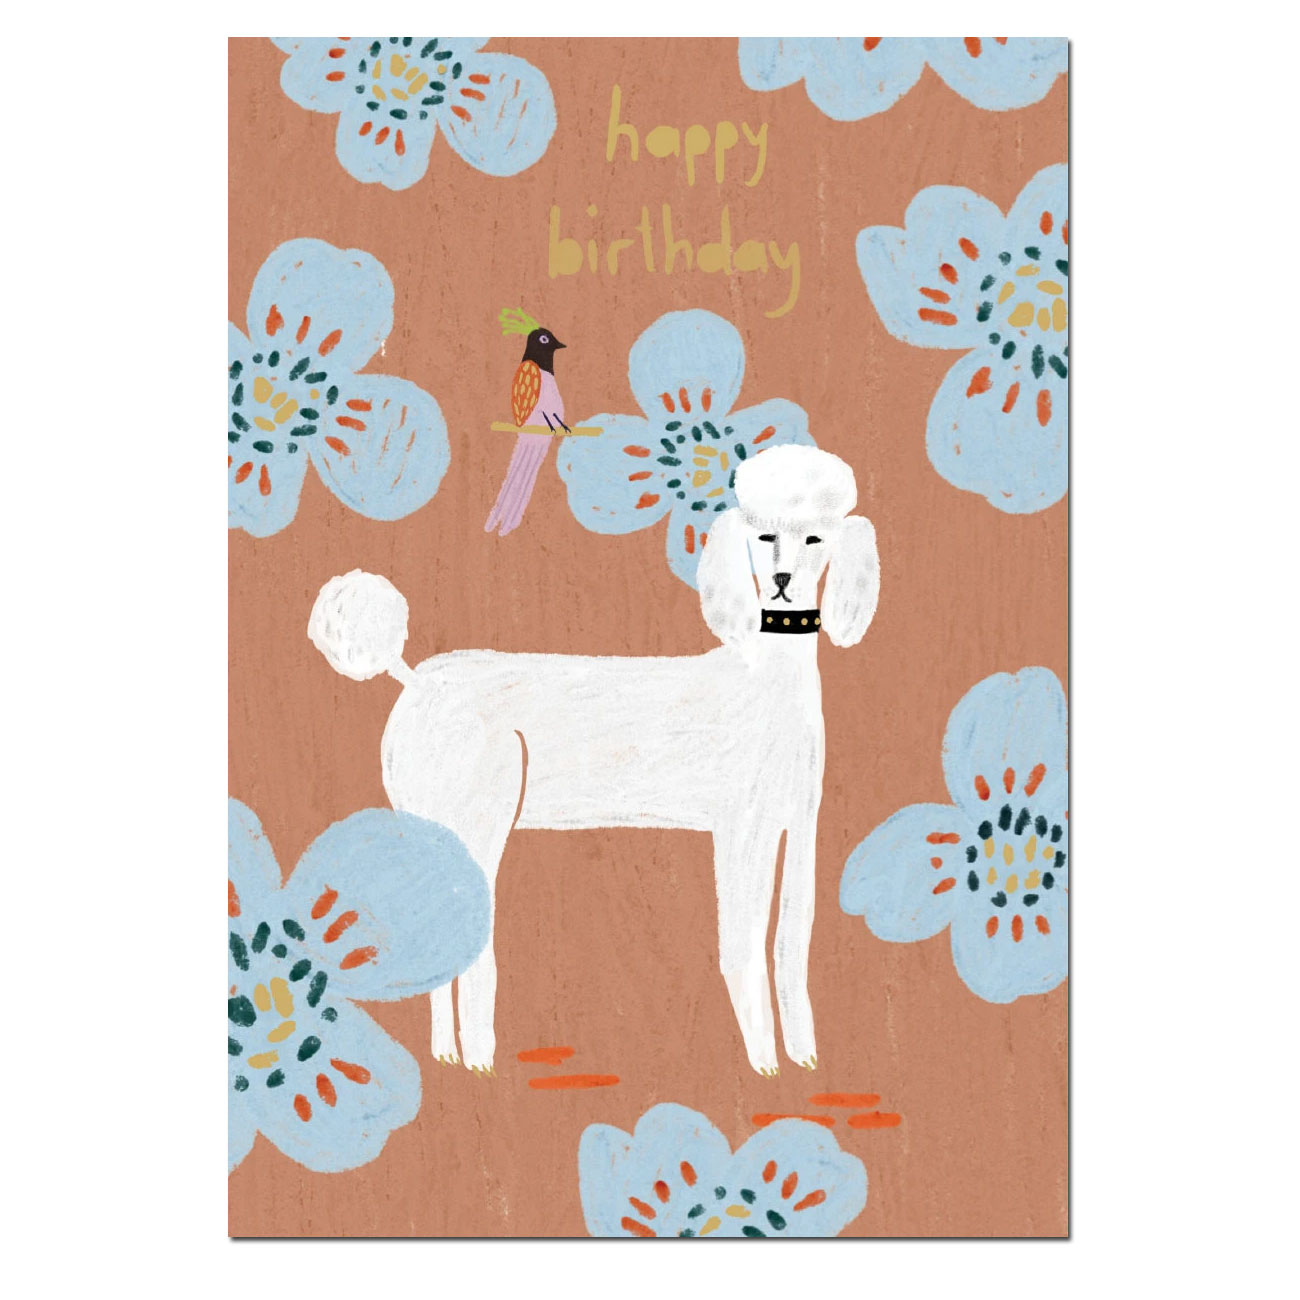 Roger la Borde Doppelkarte "Glass Menagerie - HAPPY BIRTHDAY"  , Pudel, Hund, Geburtstagskarte